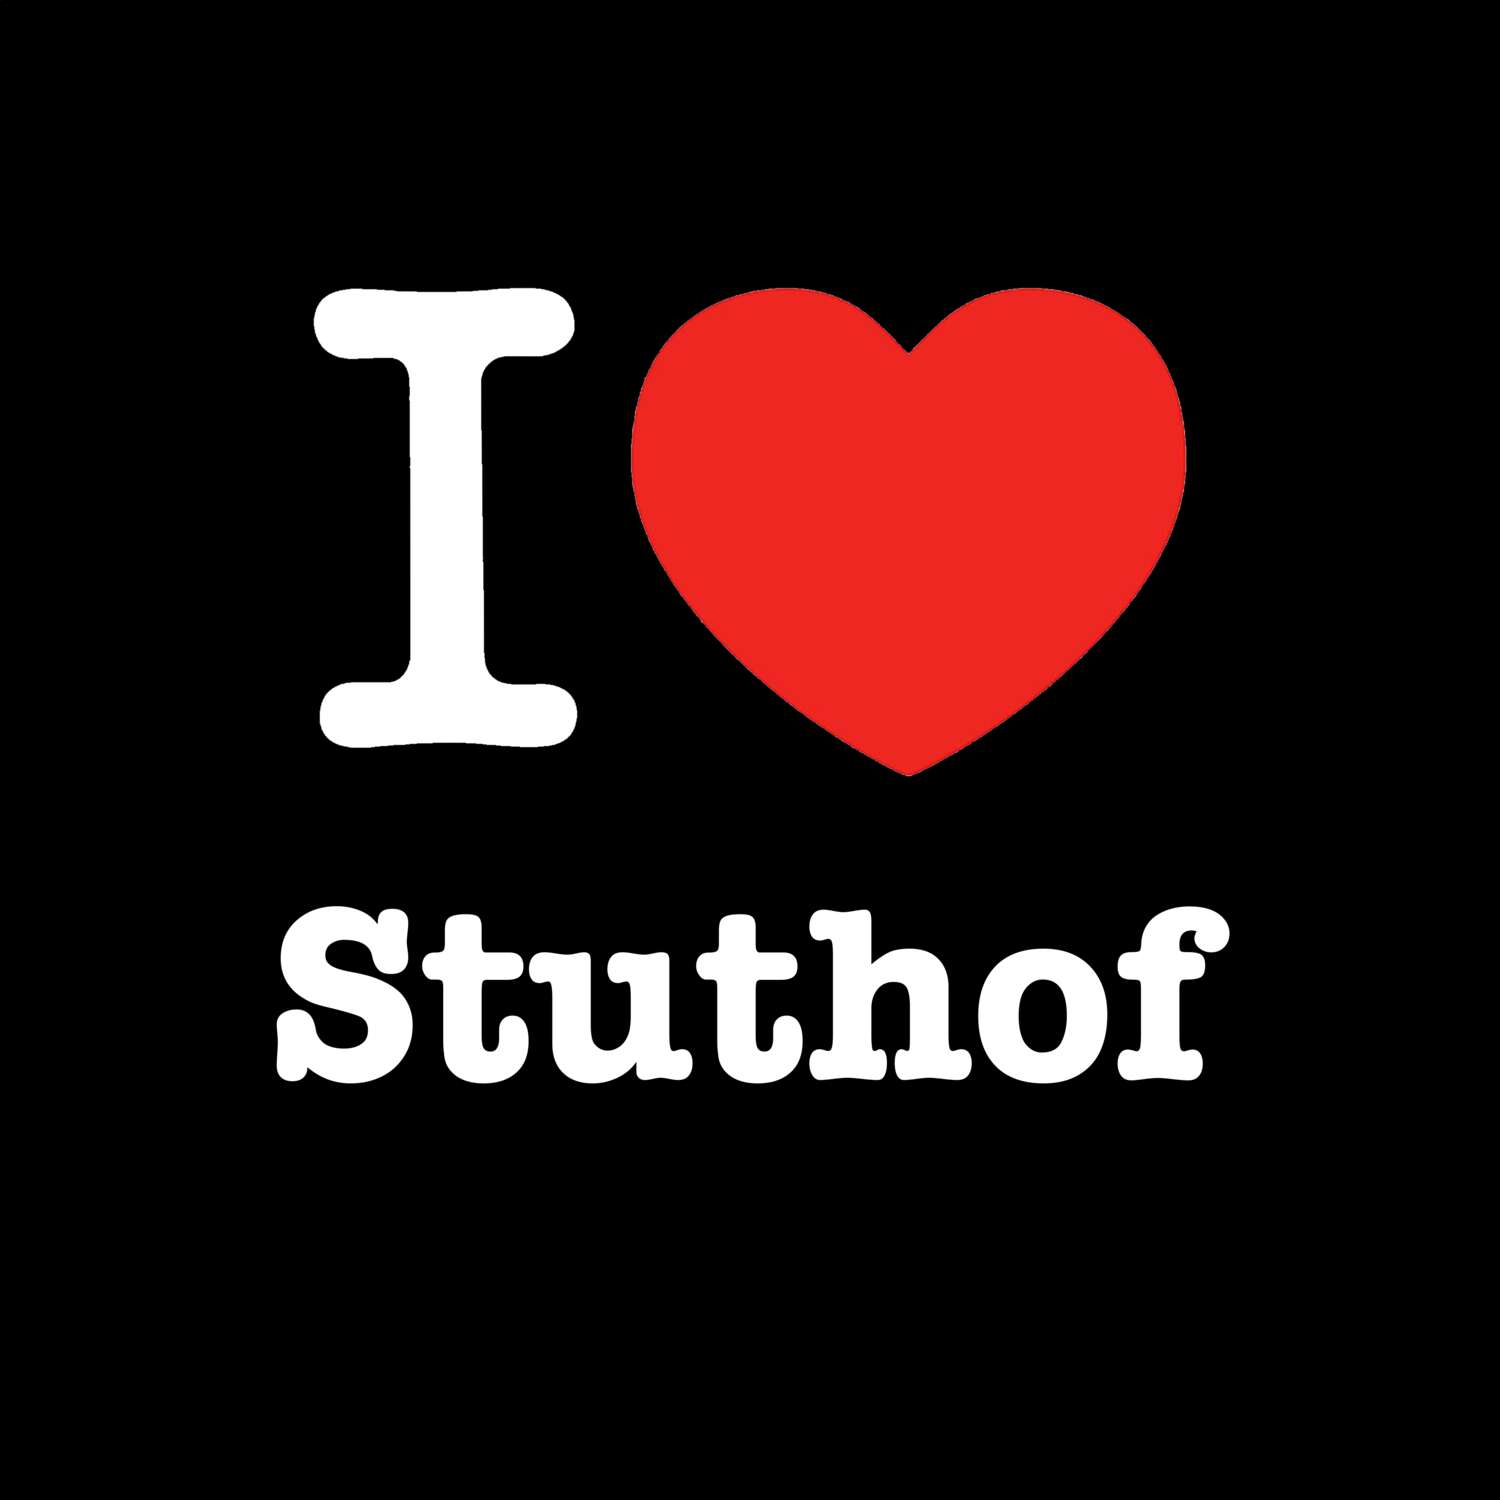 Stuthof T-Shirt »I love«